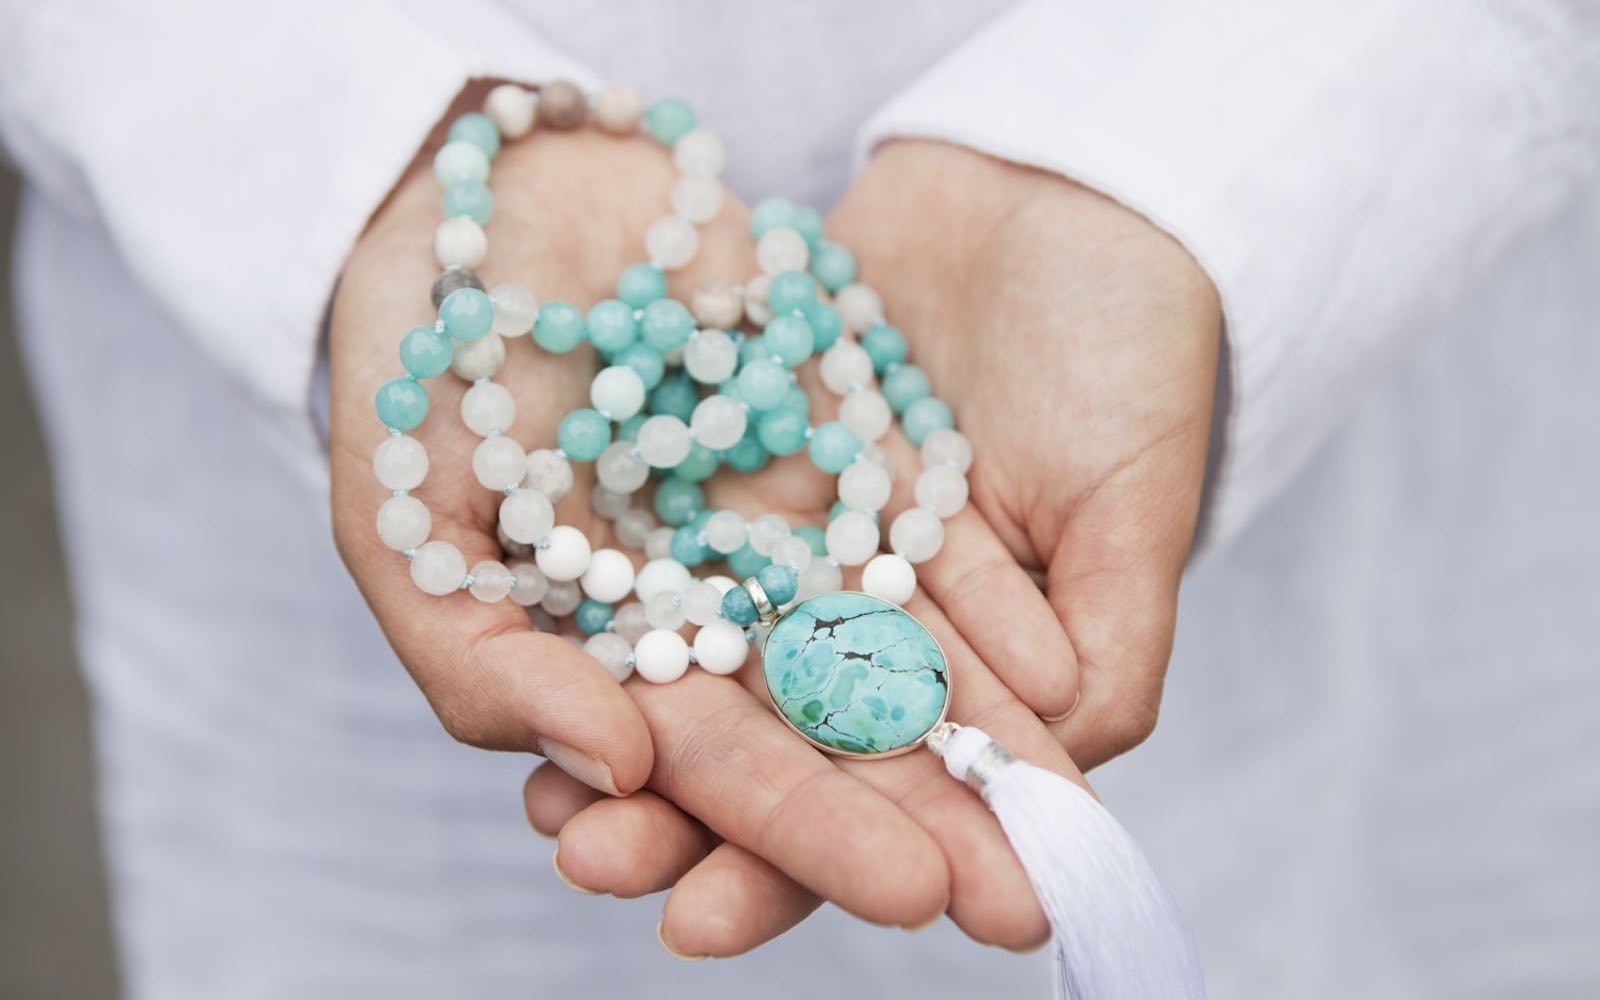 Mala beads necklace with gemstones